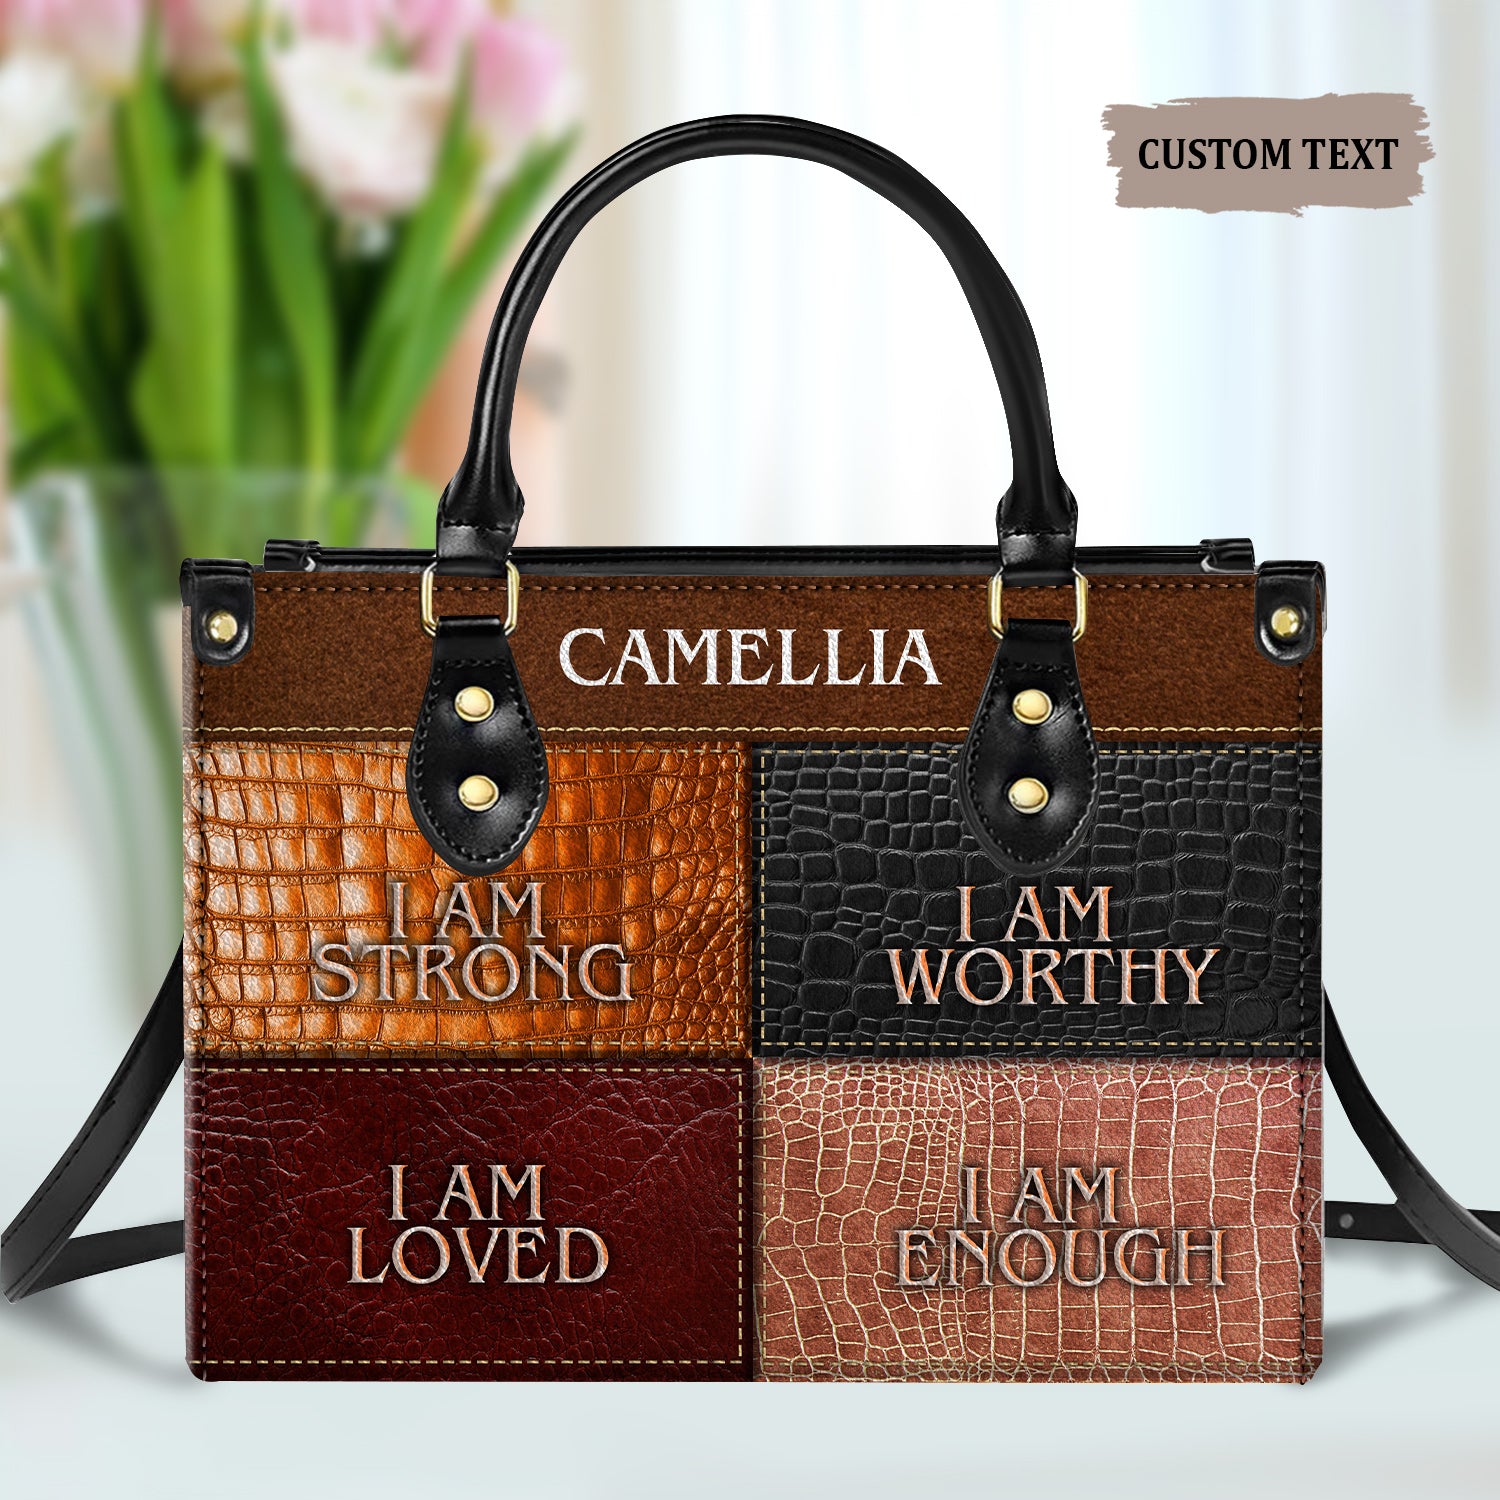 I Am Strong, I Am Worthy Christian Gift Personalized Leather Handbag